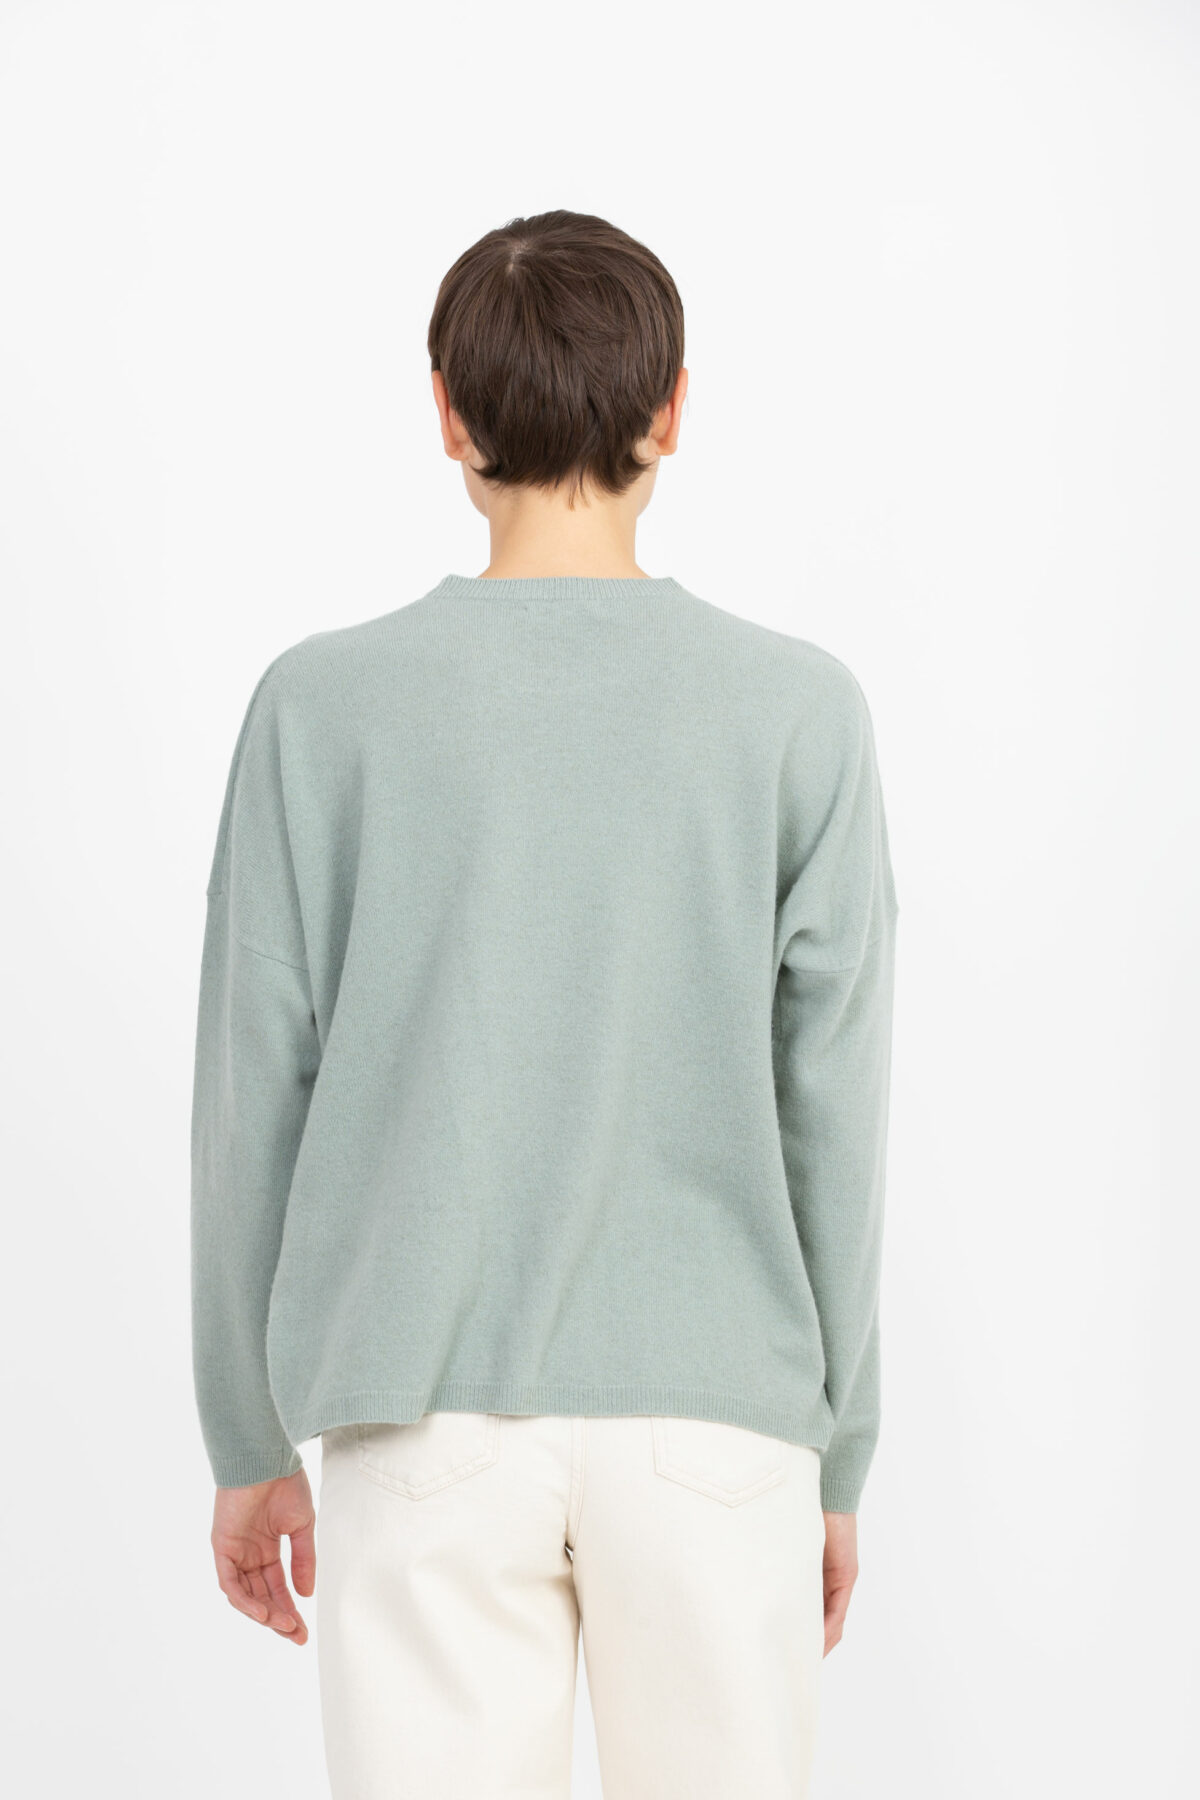 malles-green-wool-sweater-round-crossley-matchboxathens